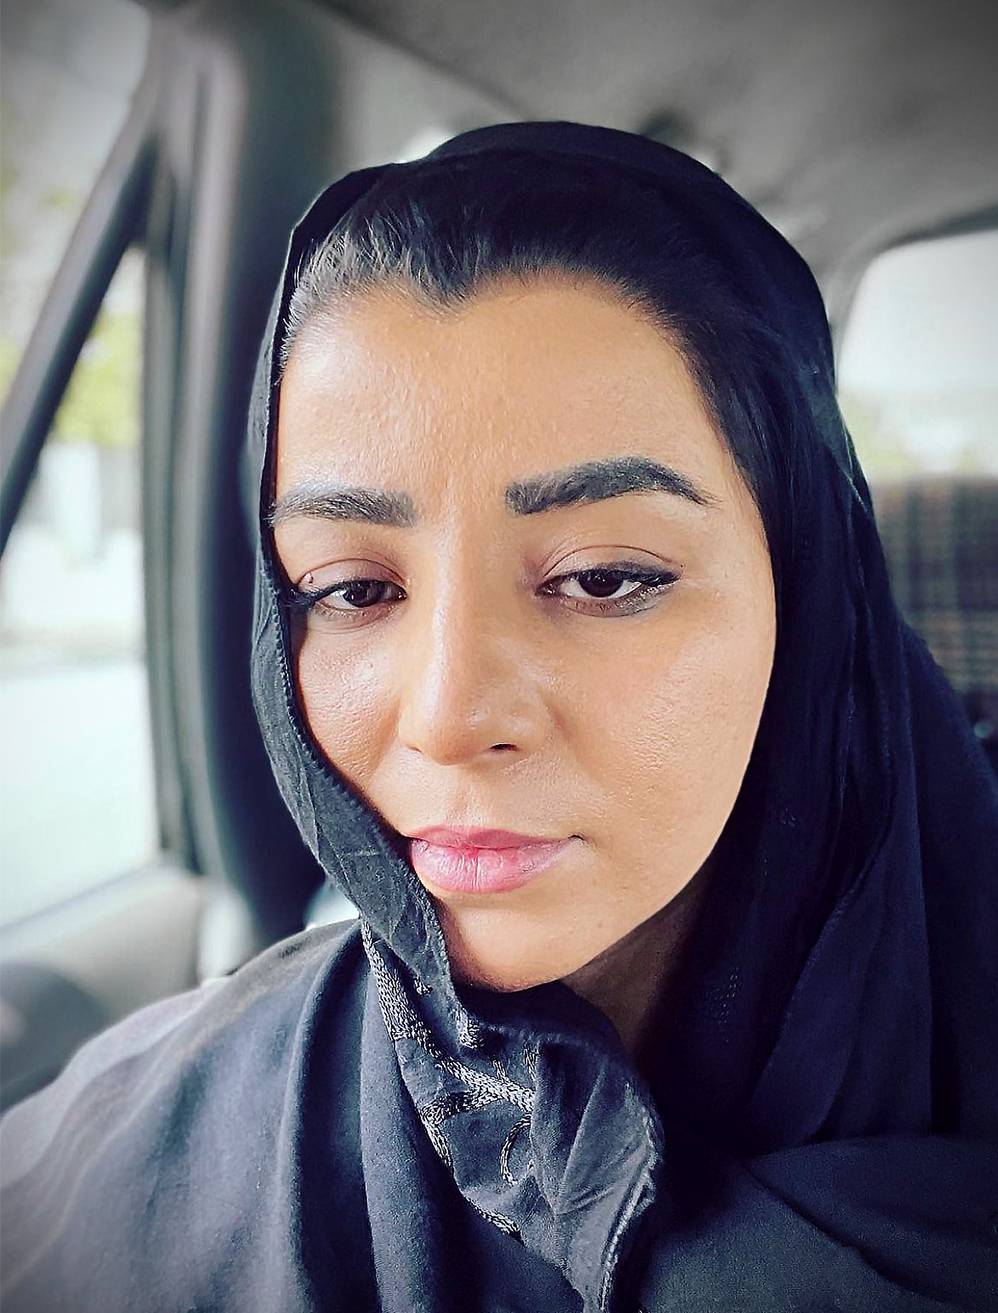 Die 29-jährige afghanische Parlamentsabgeordnete Farzana Kocha